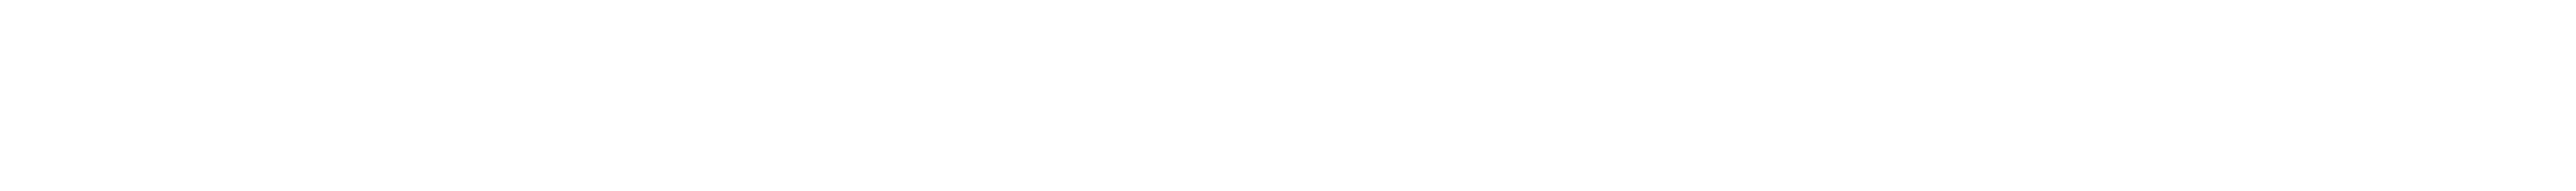 Help - Crowne Plaza White Logo (2800x1400), Png Download